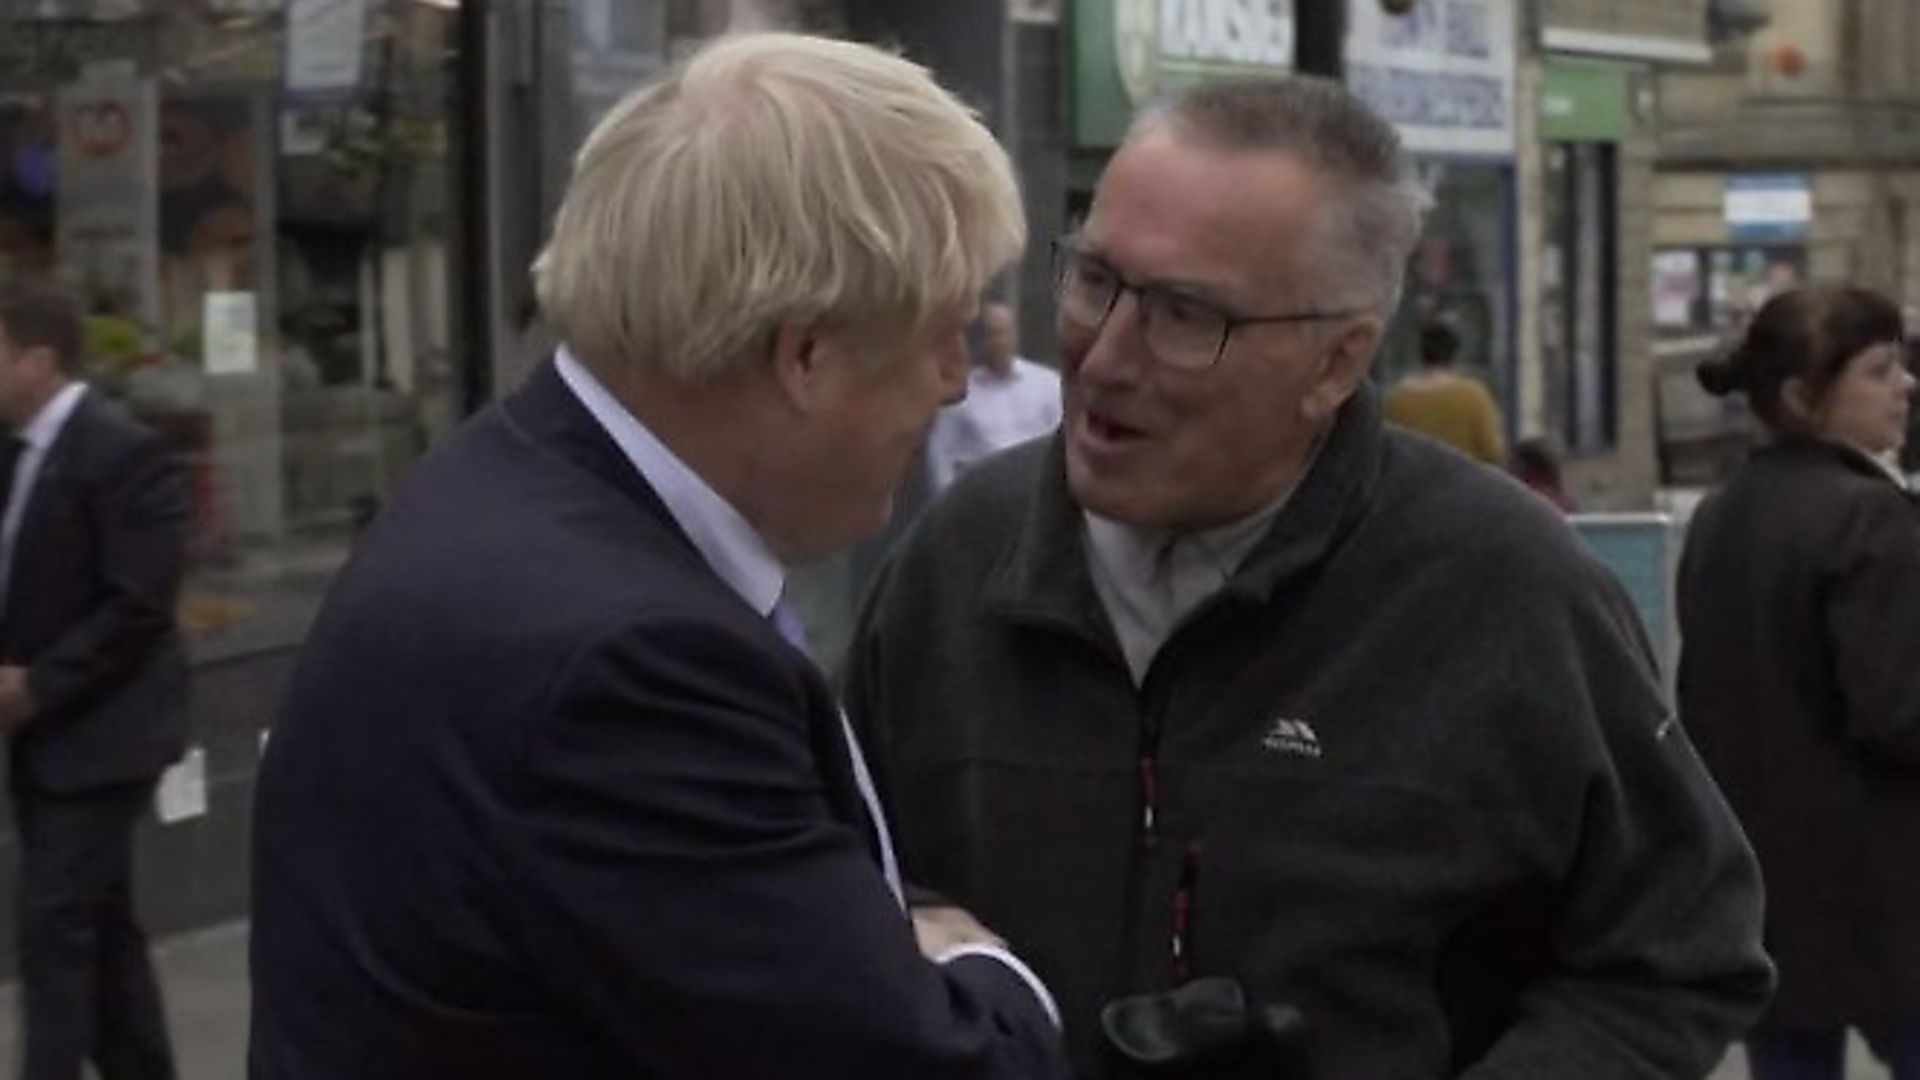 A passer-by tells Boris Johnson: "Please leave my town". Photograph: BBC. - Credit: Archant